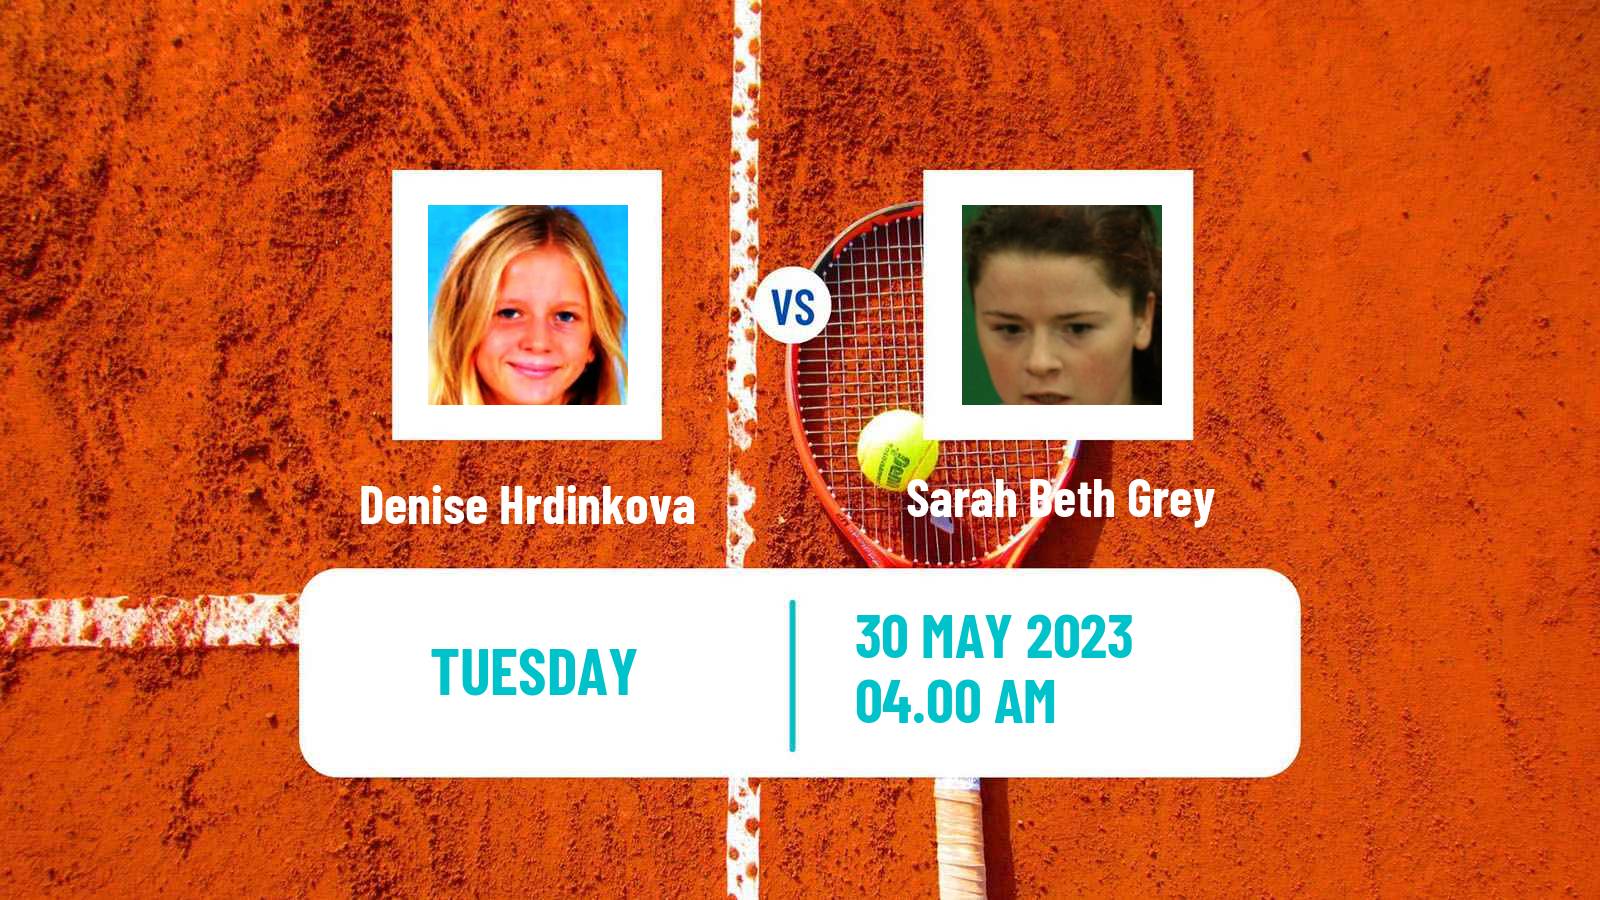 Tennis ITF W40 Otocec 2 Women Denise Hrdinkova - Sarah Beth Grey